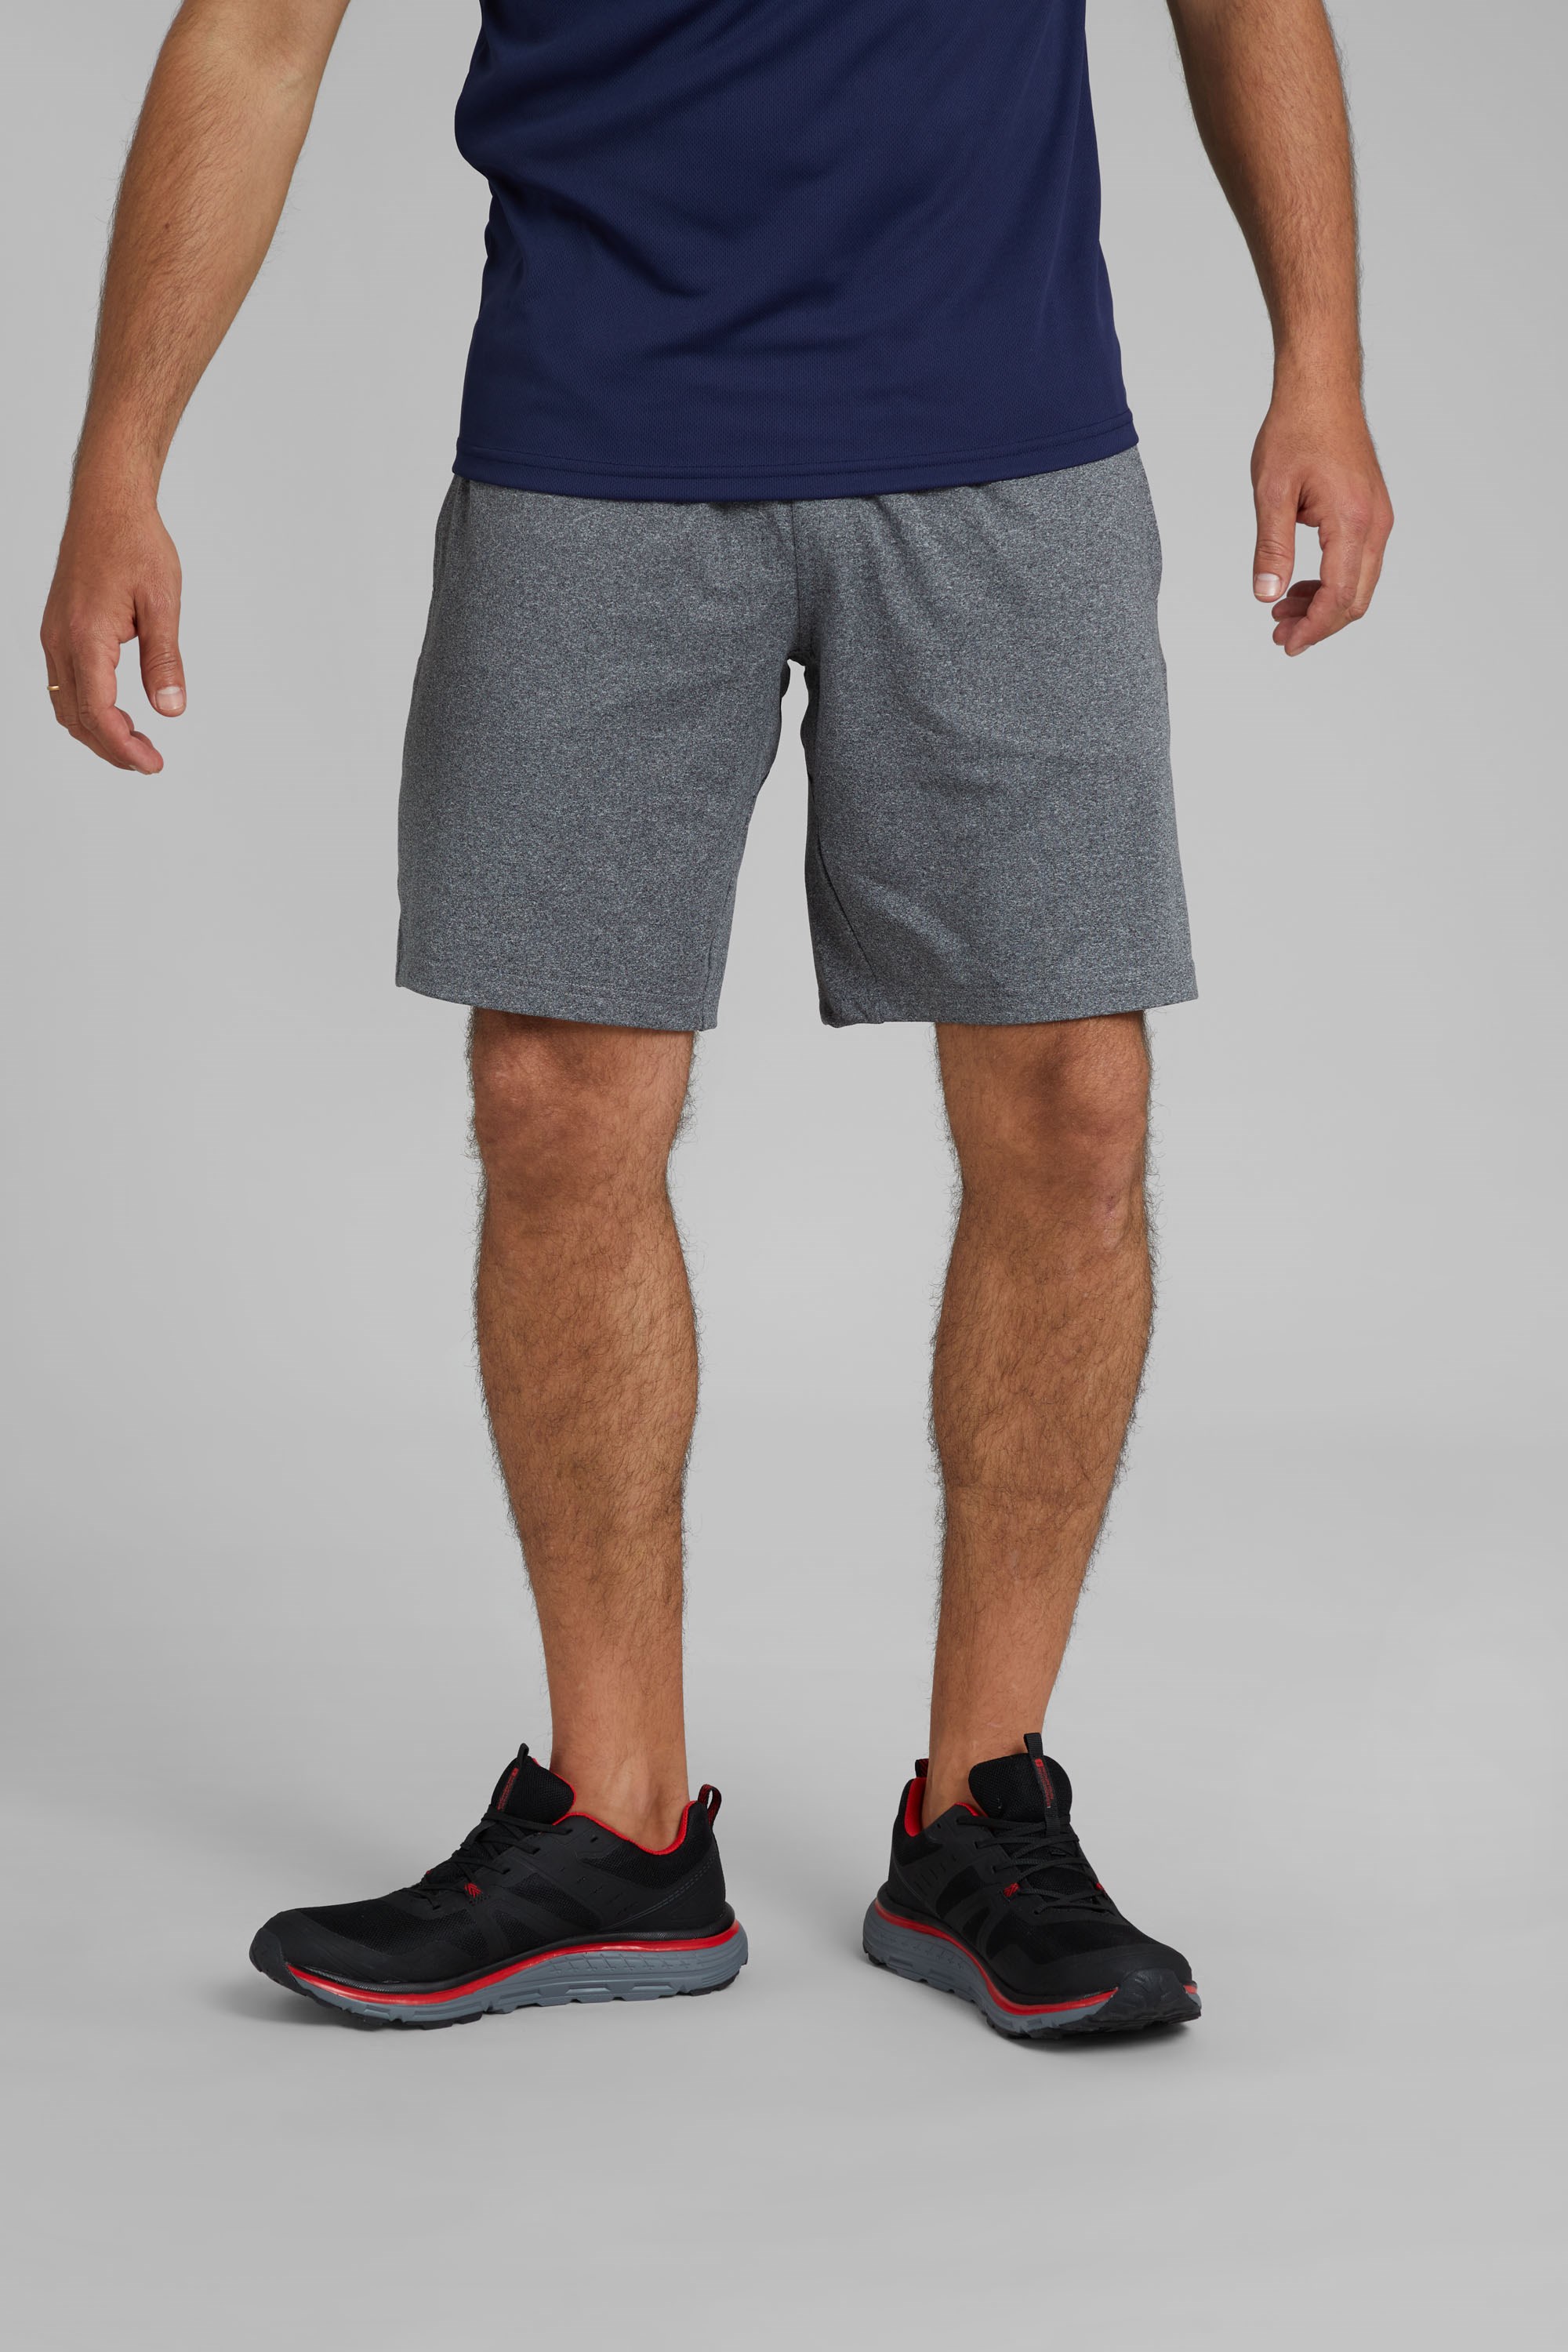 Tempo Mens Jersey Shorts - Grey